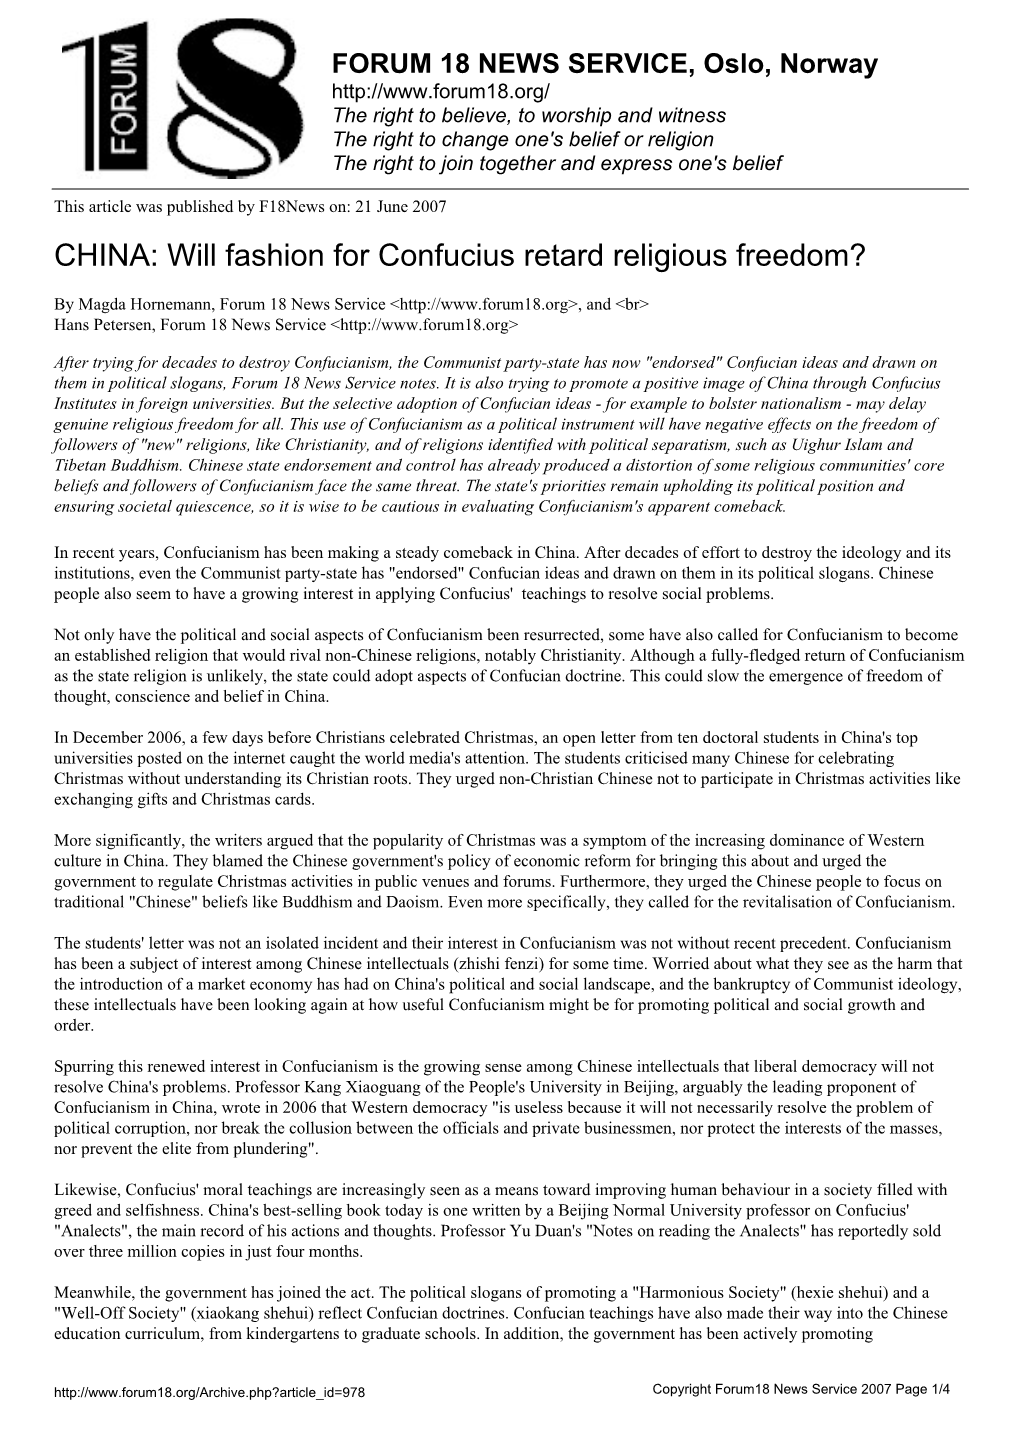 CHINA: Will Fashion for Confucius Retard Religious Freedom?